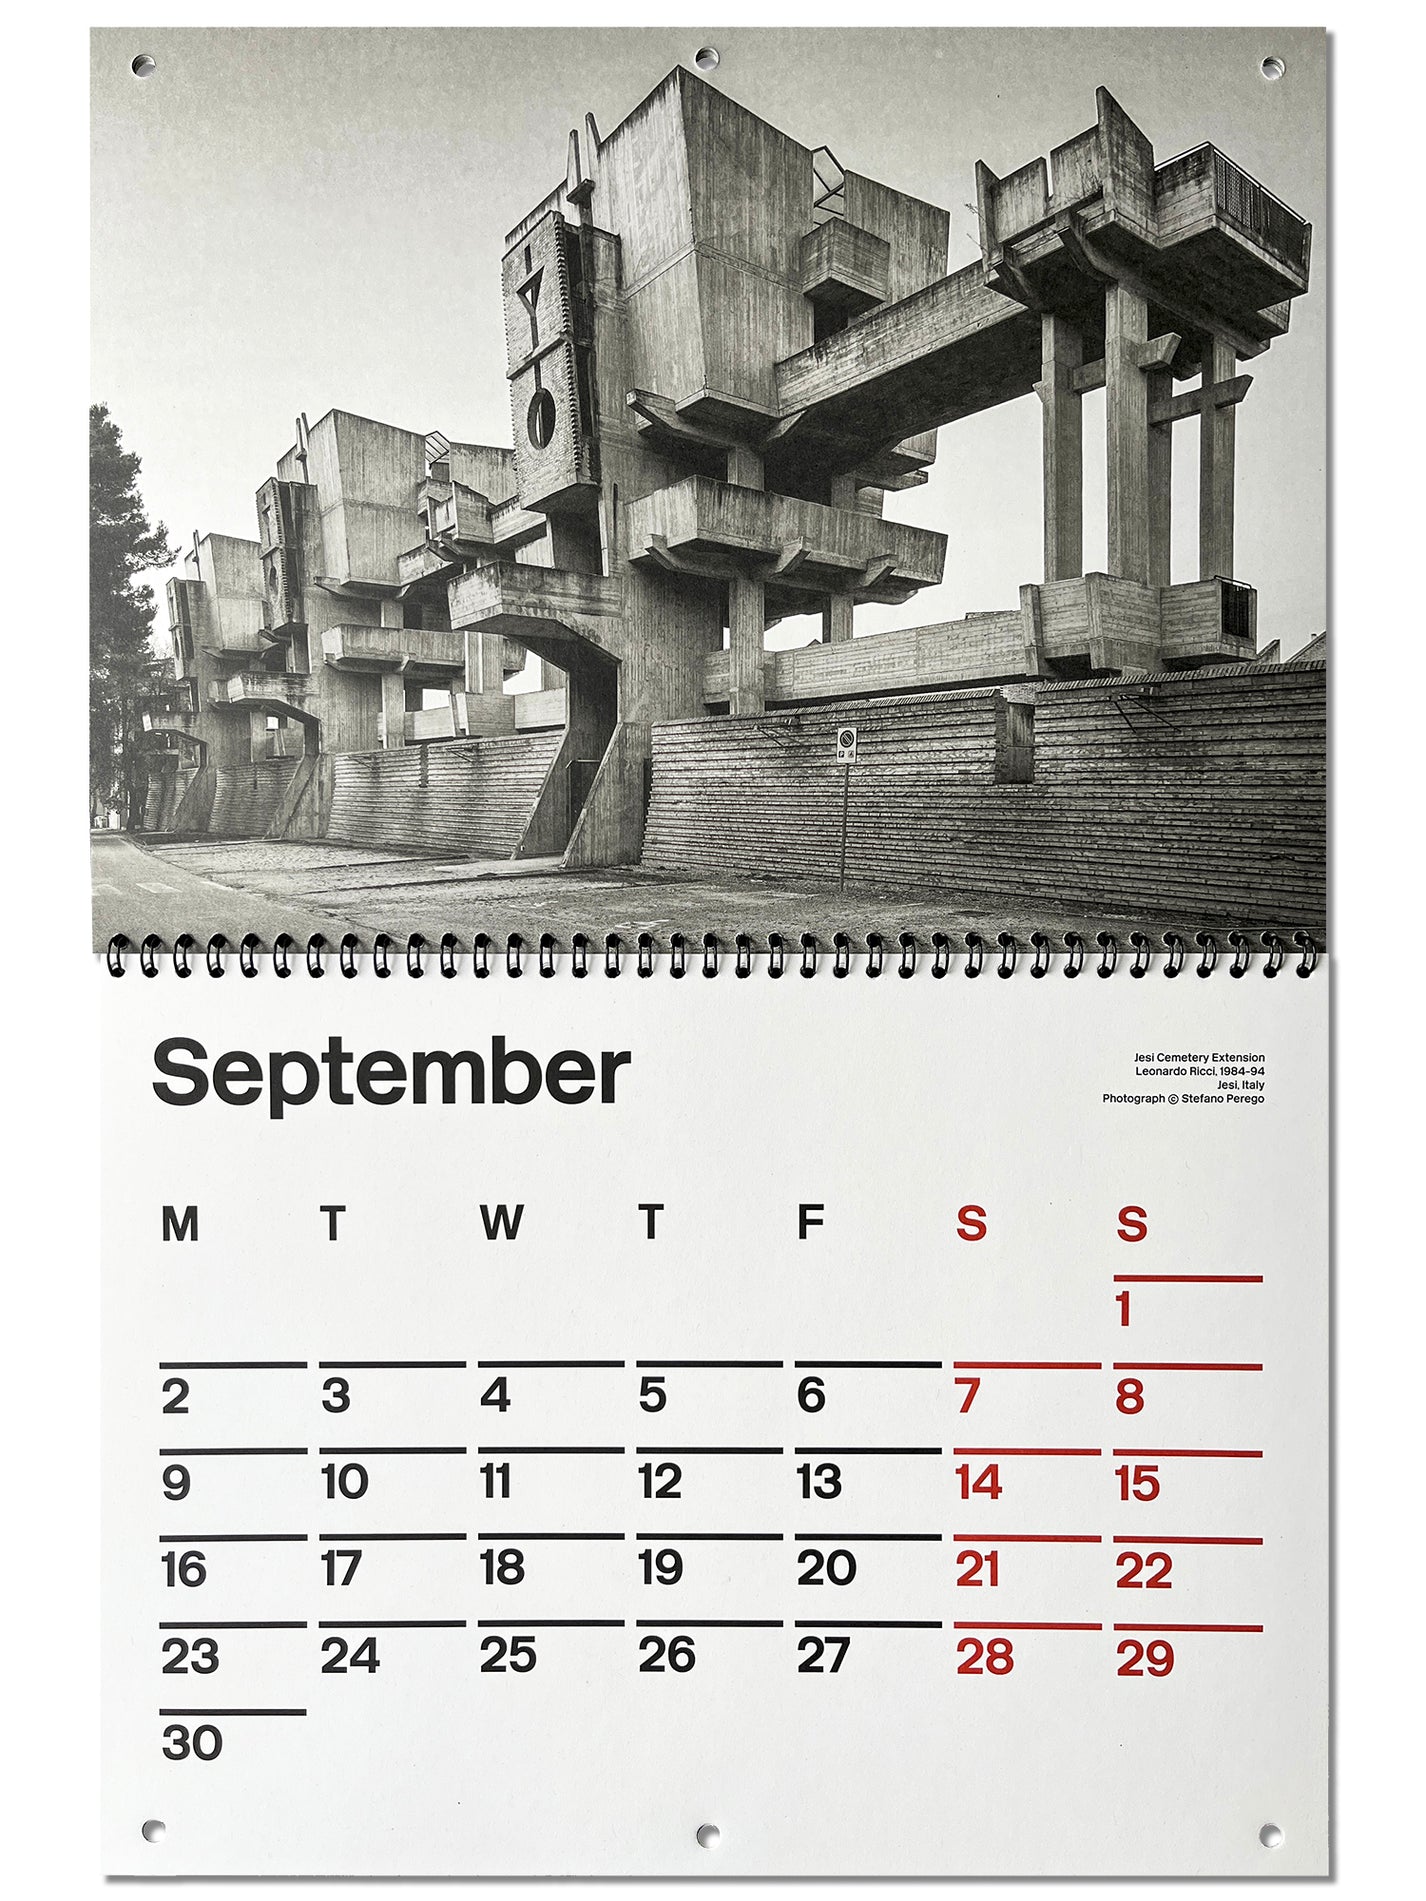 Brutalist Calendar 2024 Monthly calendar with photographs of